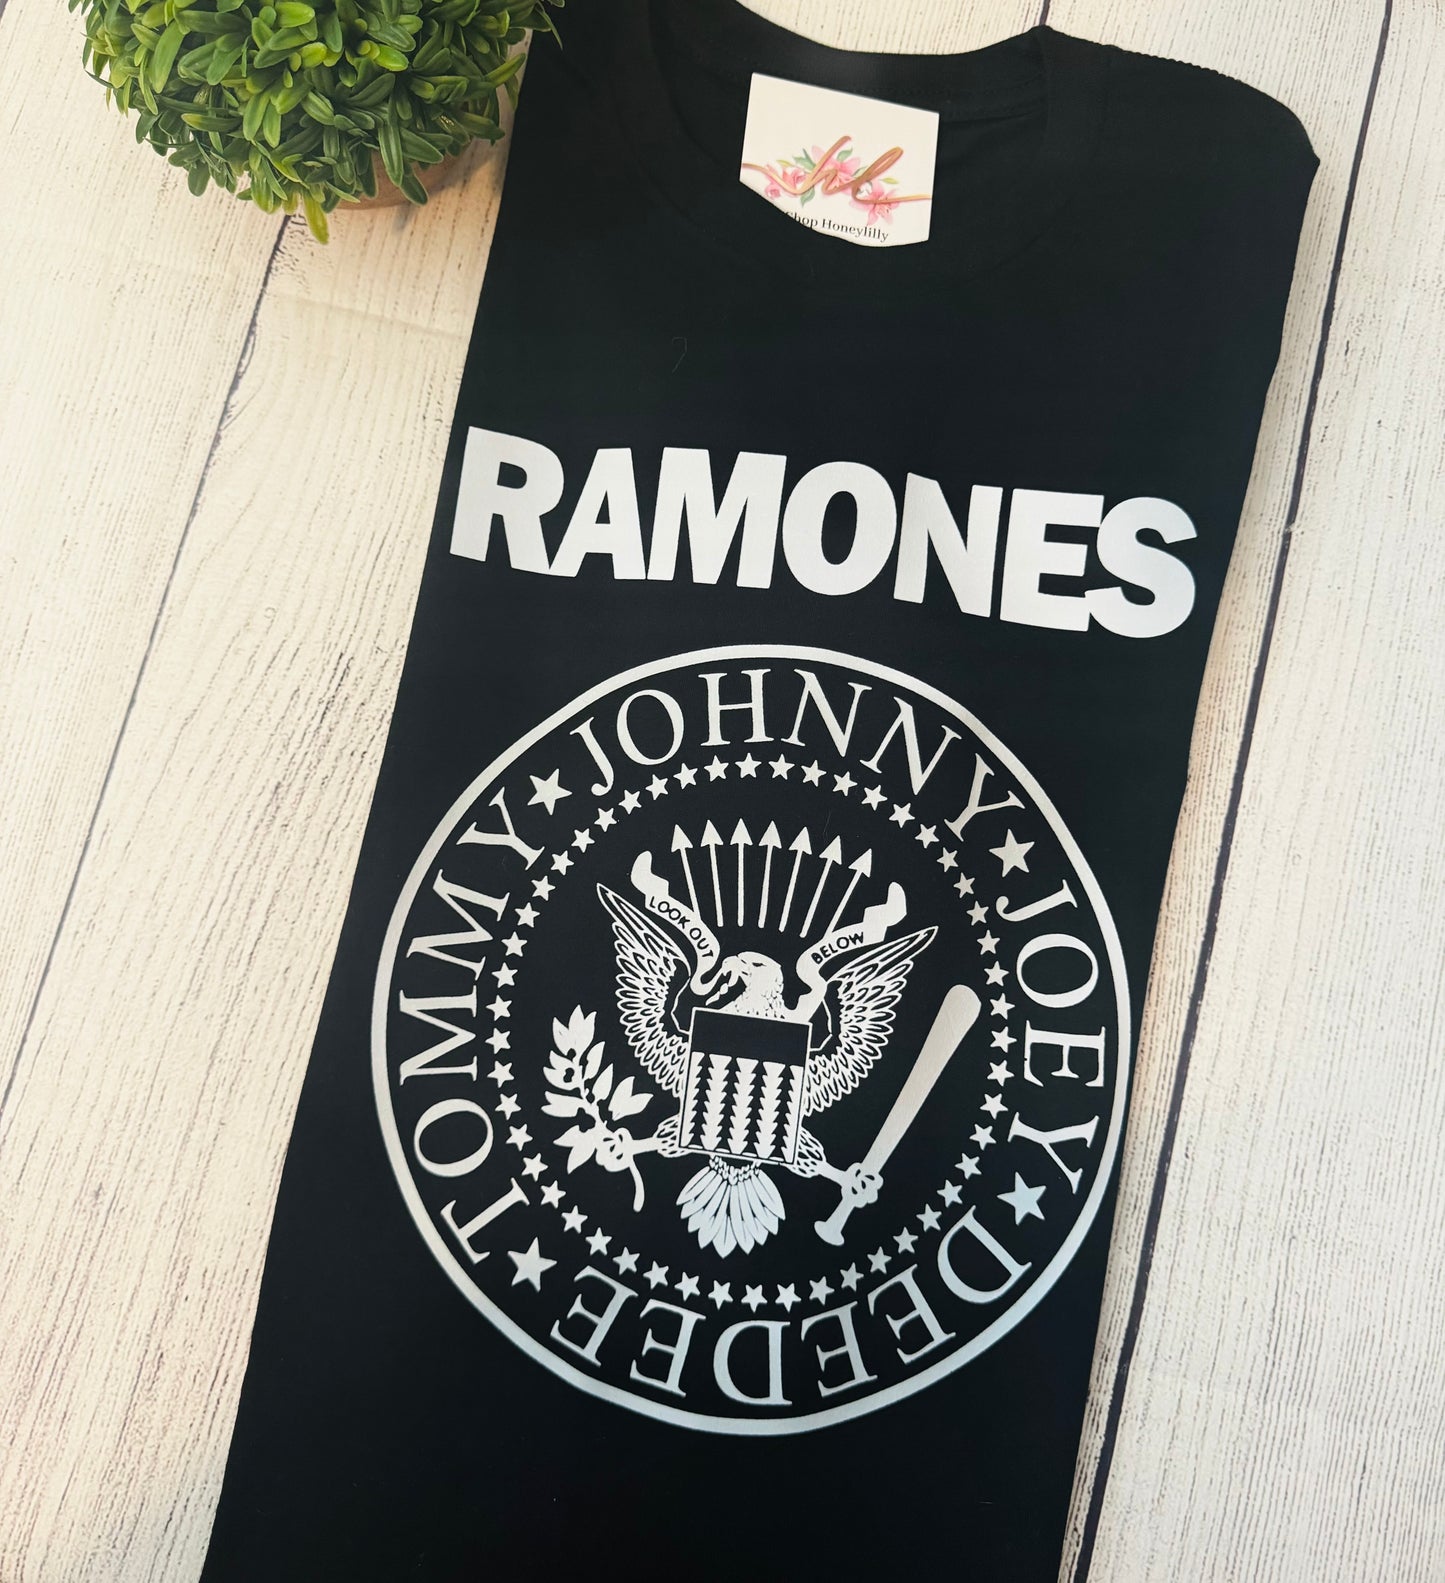 Ramones shirt